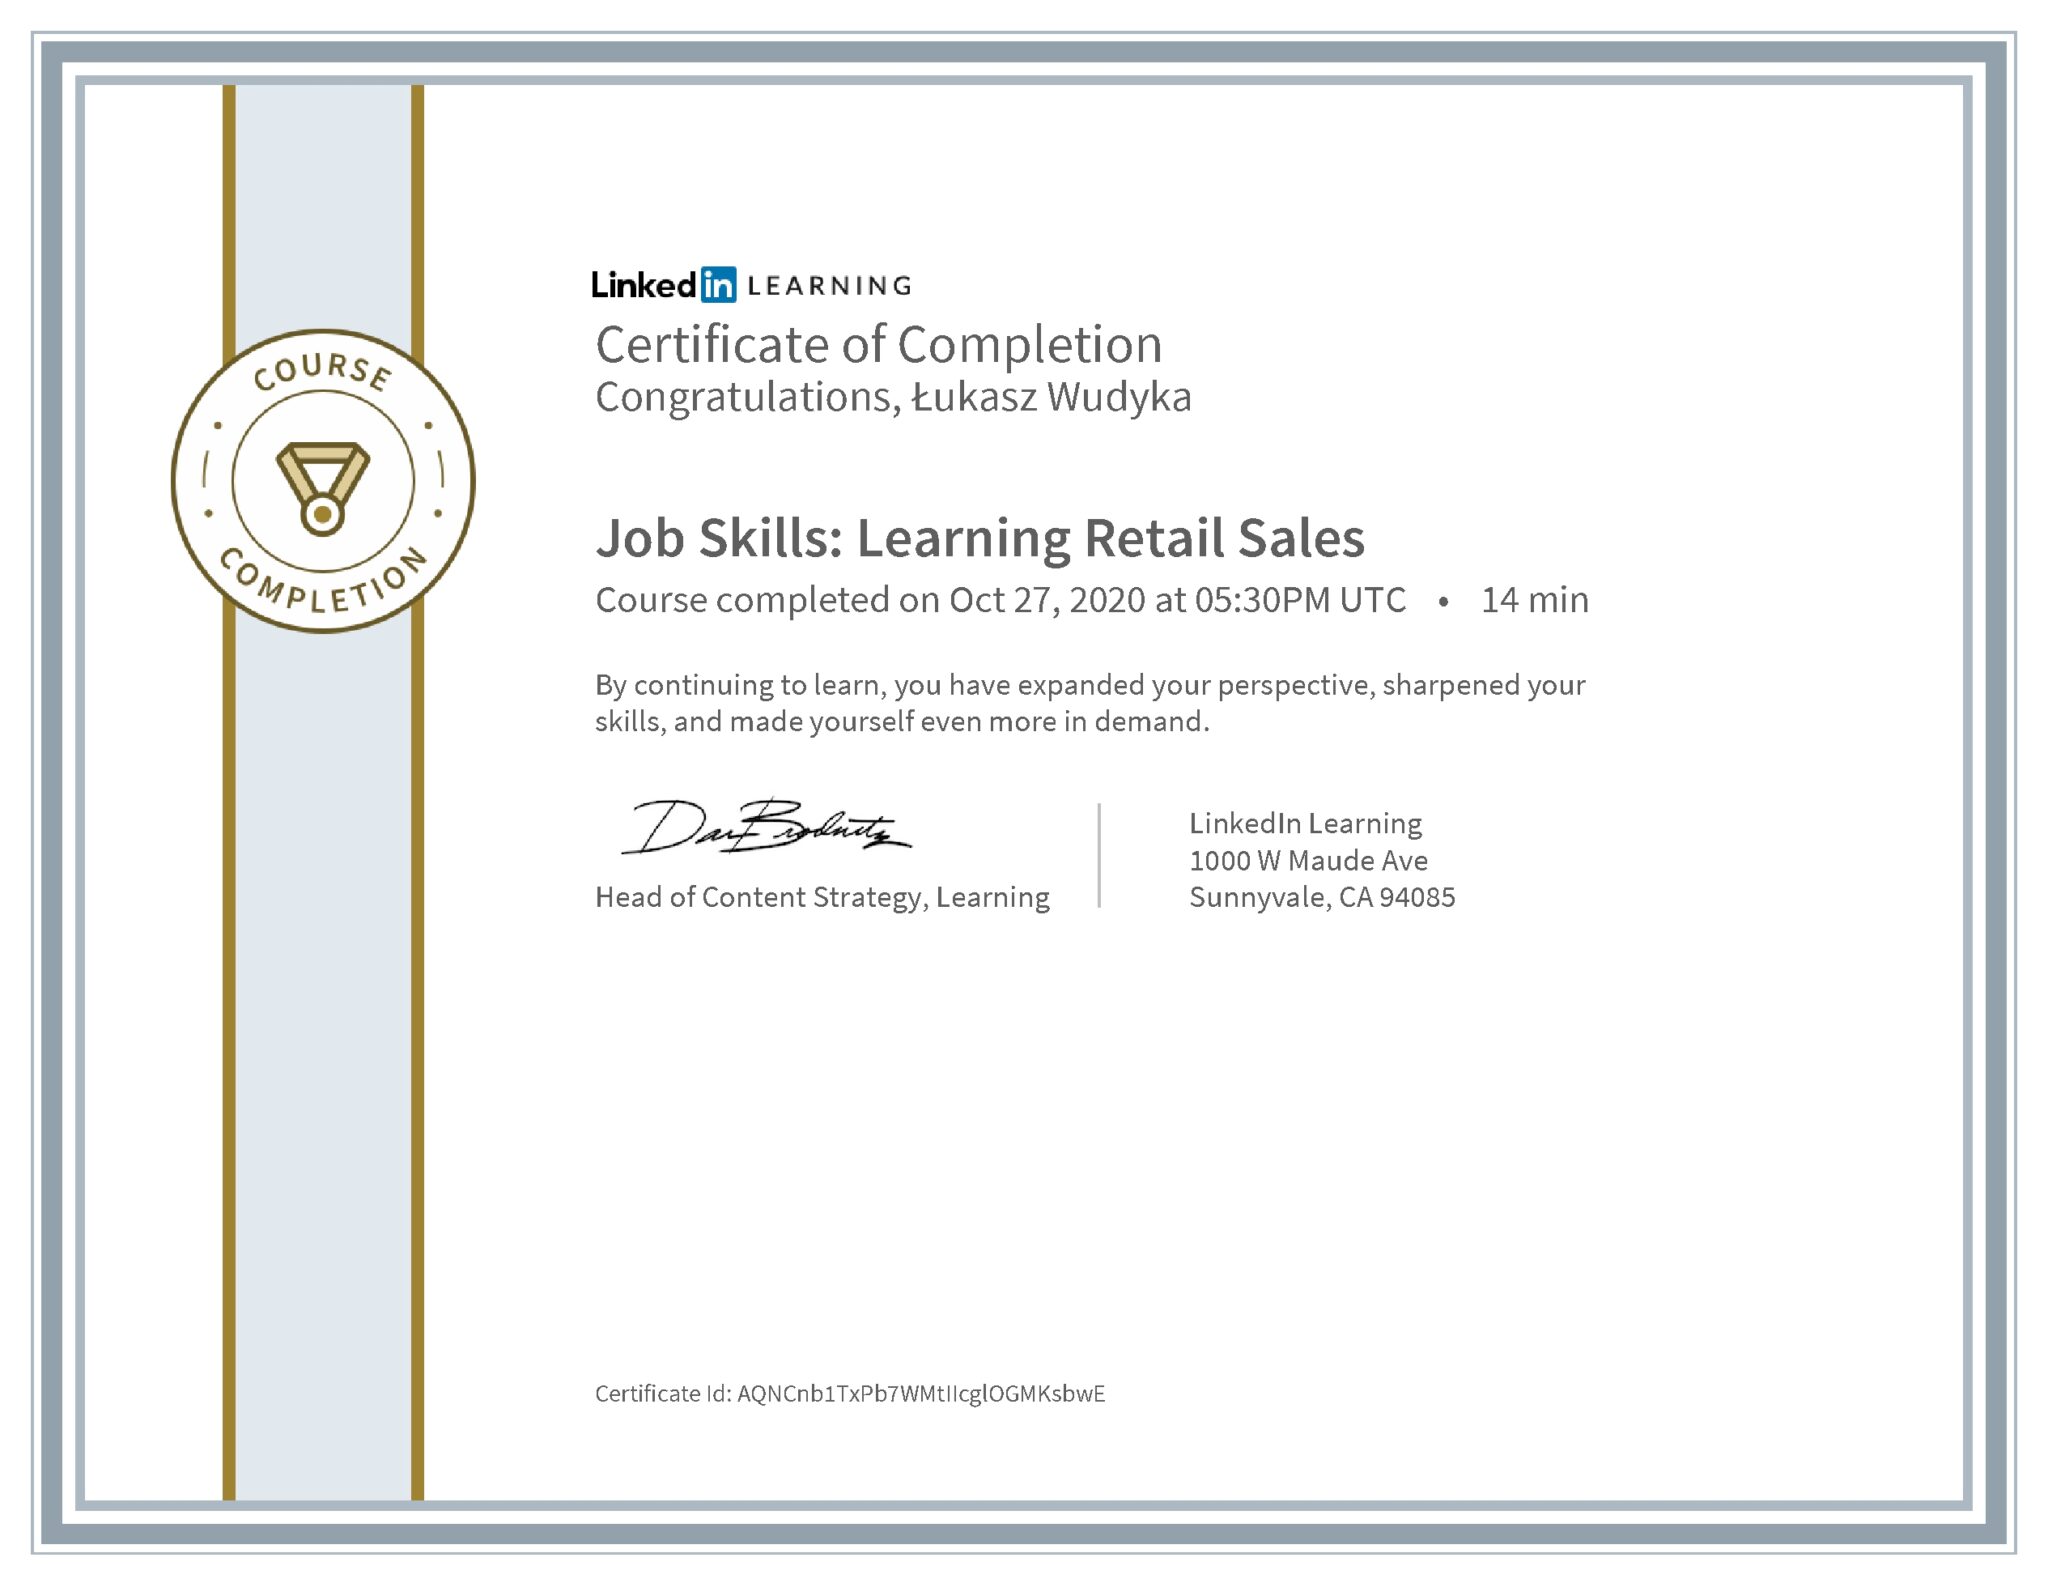 Łukasz Wudyka certyfikat LinkedIn Job Skills: Learning Retail Sales